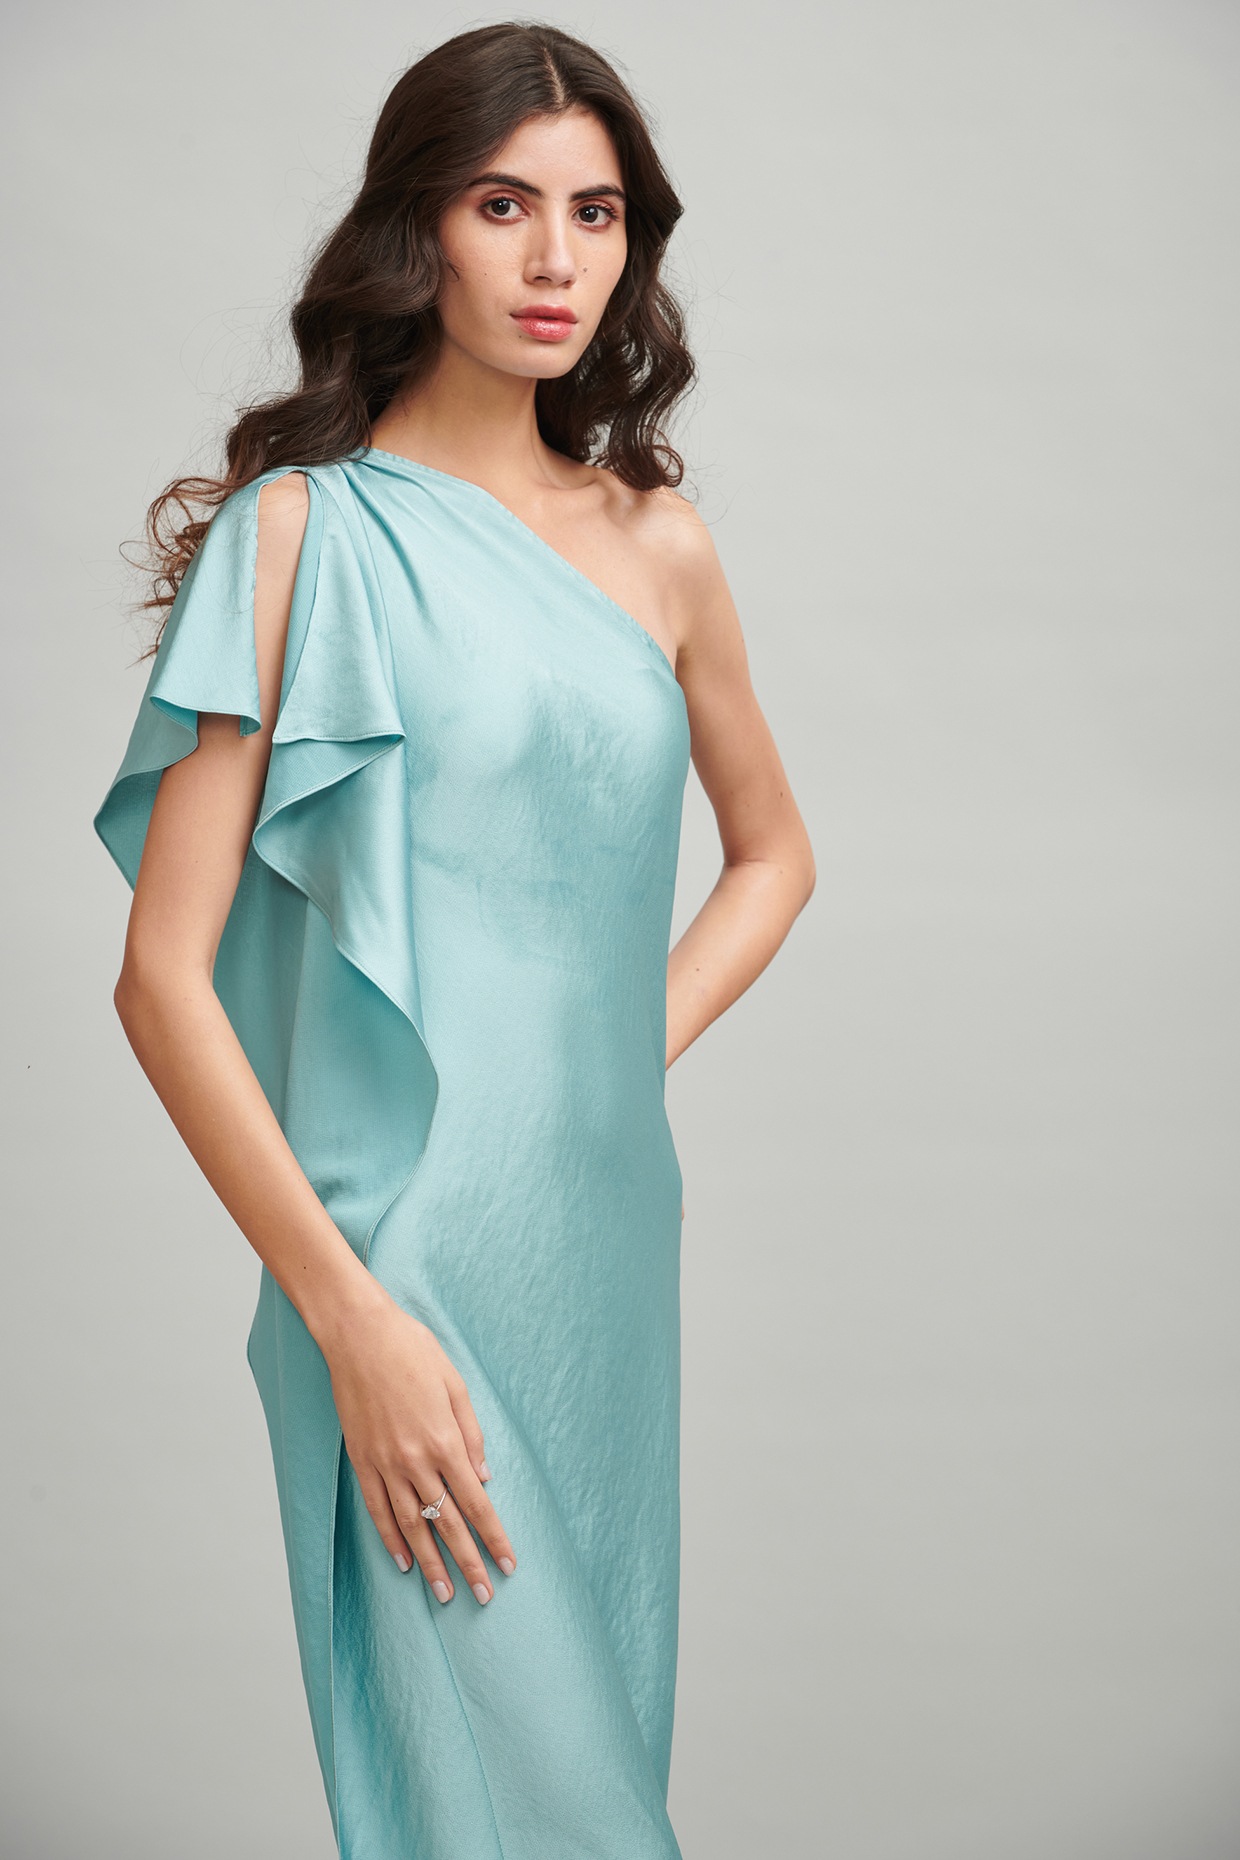 Aqua Blue Sequin One Shoulder Dress,Short One Shoulder Sequin Party Dress  By Vampal